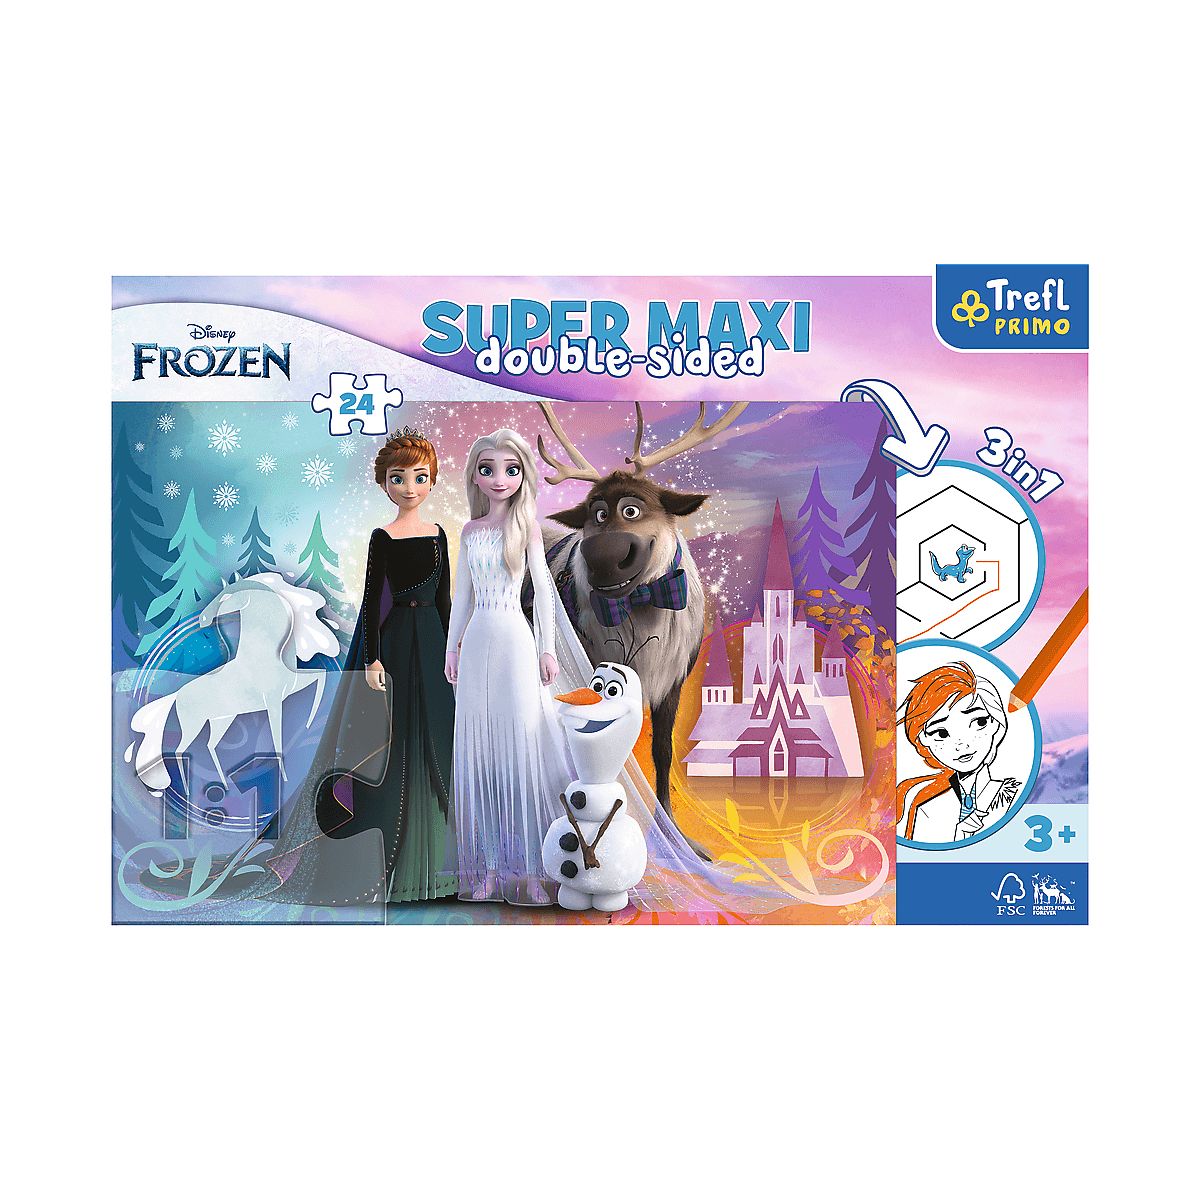 Puzzle Trefl Frozen 2 Super maxi Wesoły Świat Krainy Lodu 24 el. (41000)